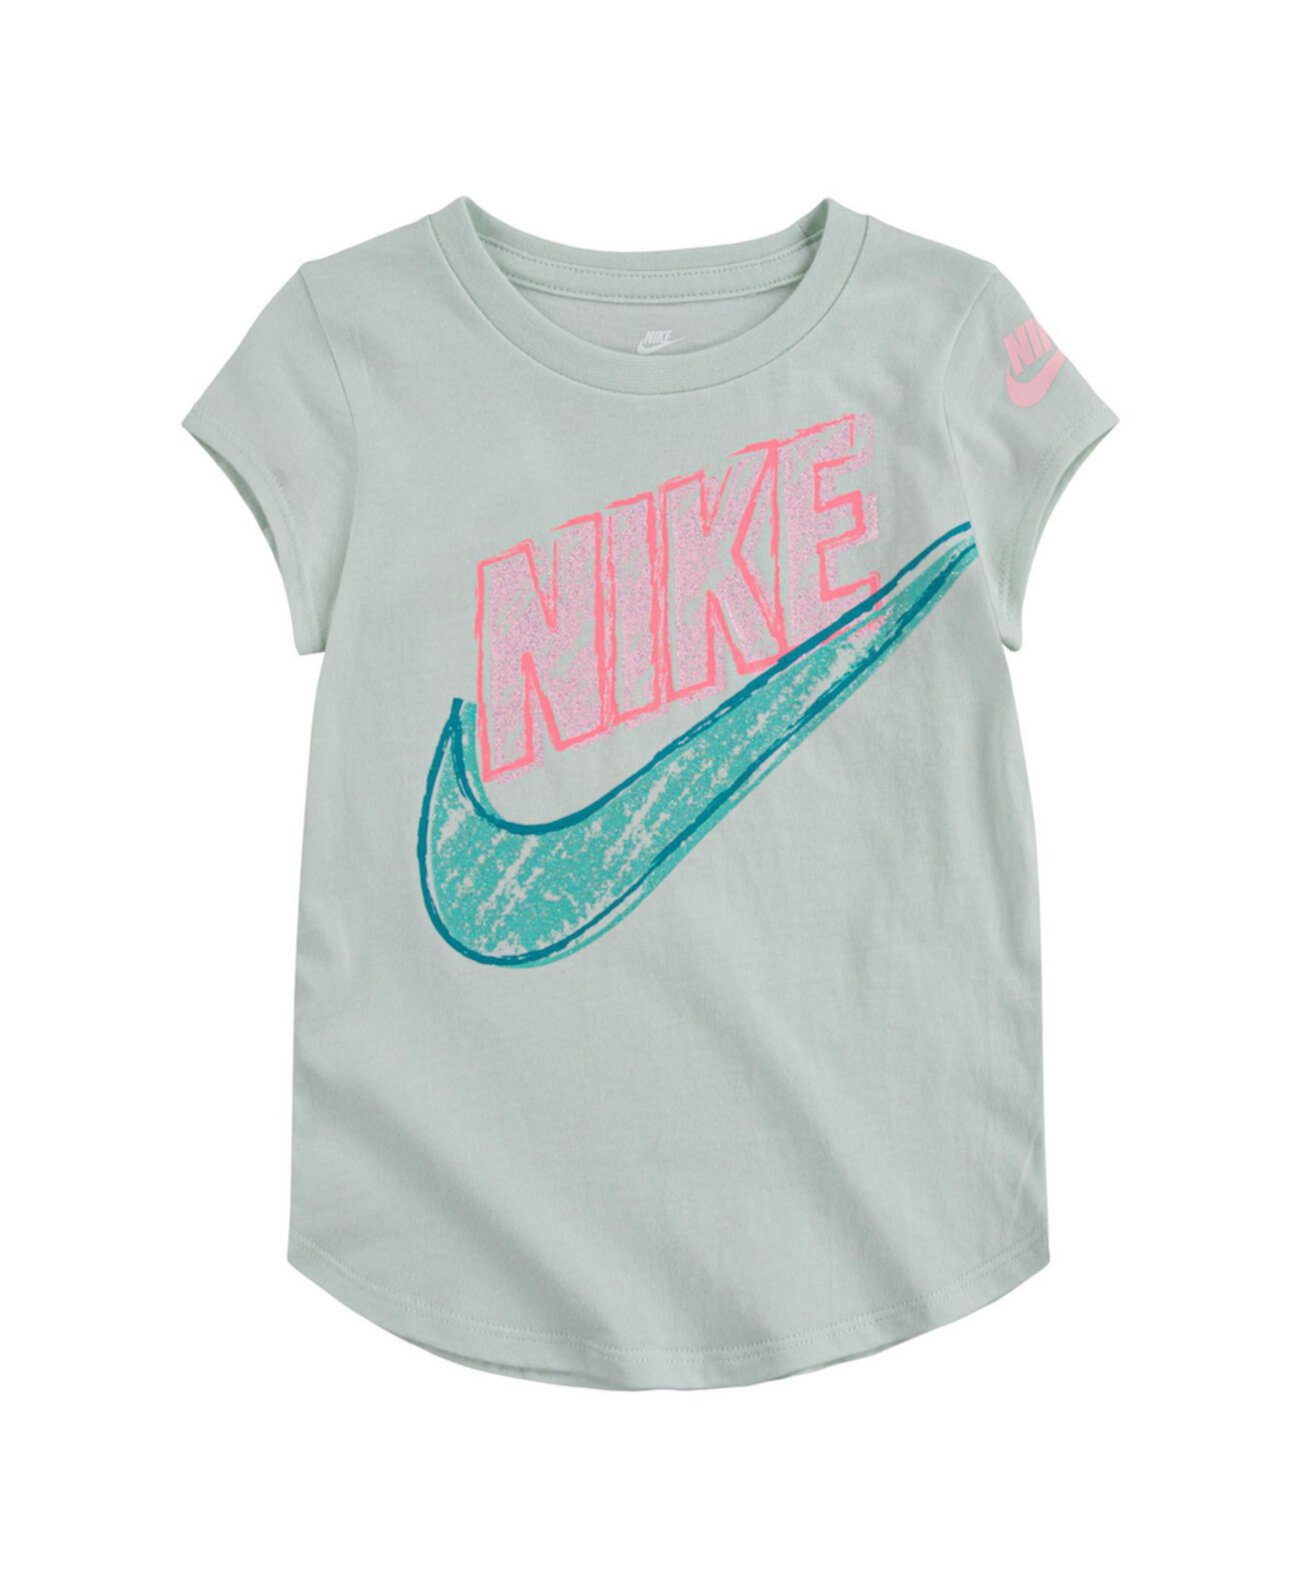 Футболка Little Girls с графическим логотипом Nike